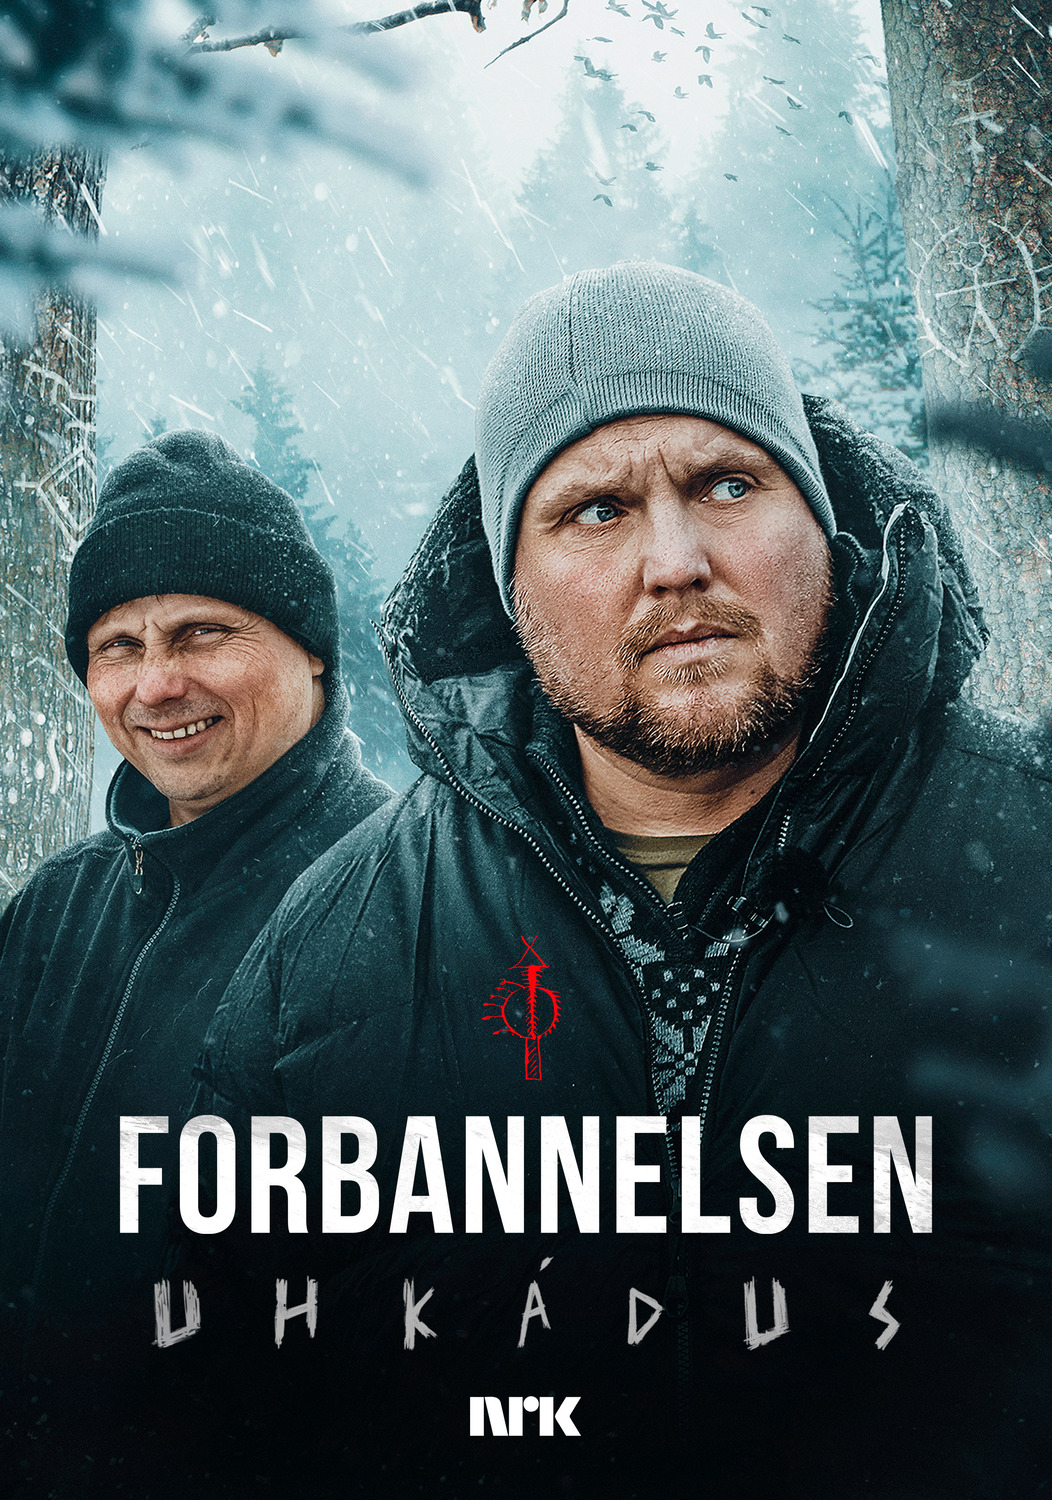 Extra Large TV Poster Image for Forbannelsen - Uhkádus 